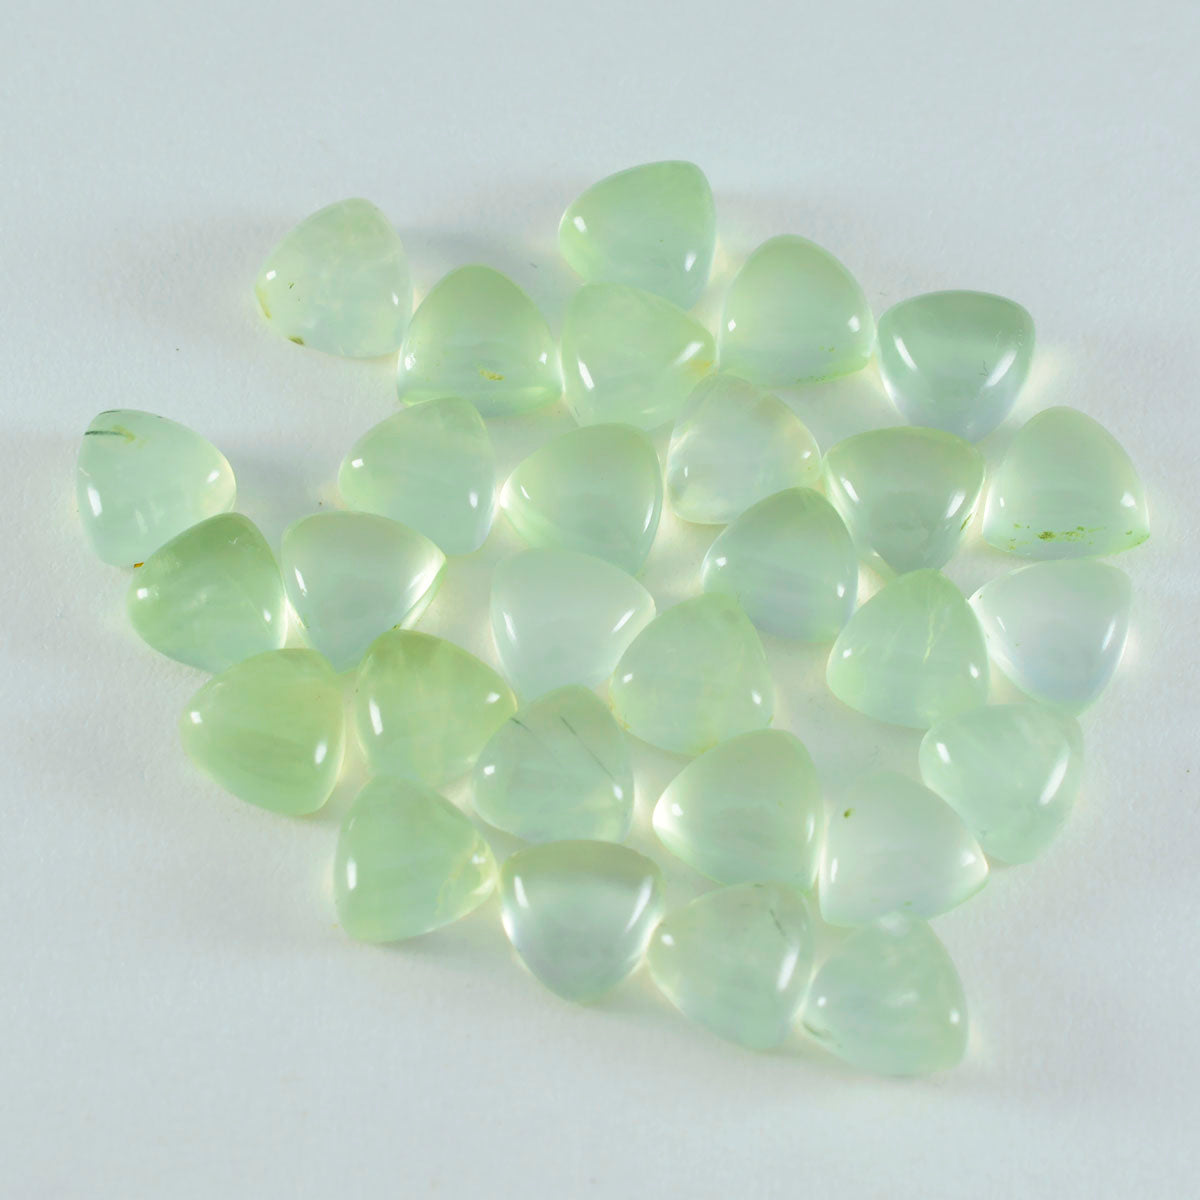 Riyogems 1PC Green Prehnite Cabochon 6x6 mm Trillion Shape pretty Quality Loose Gemstone